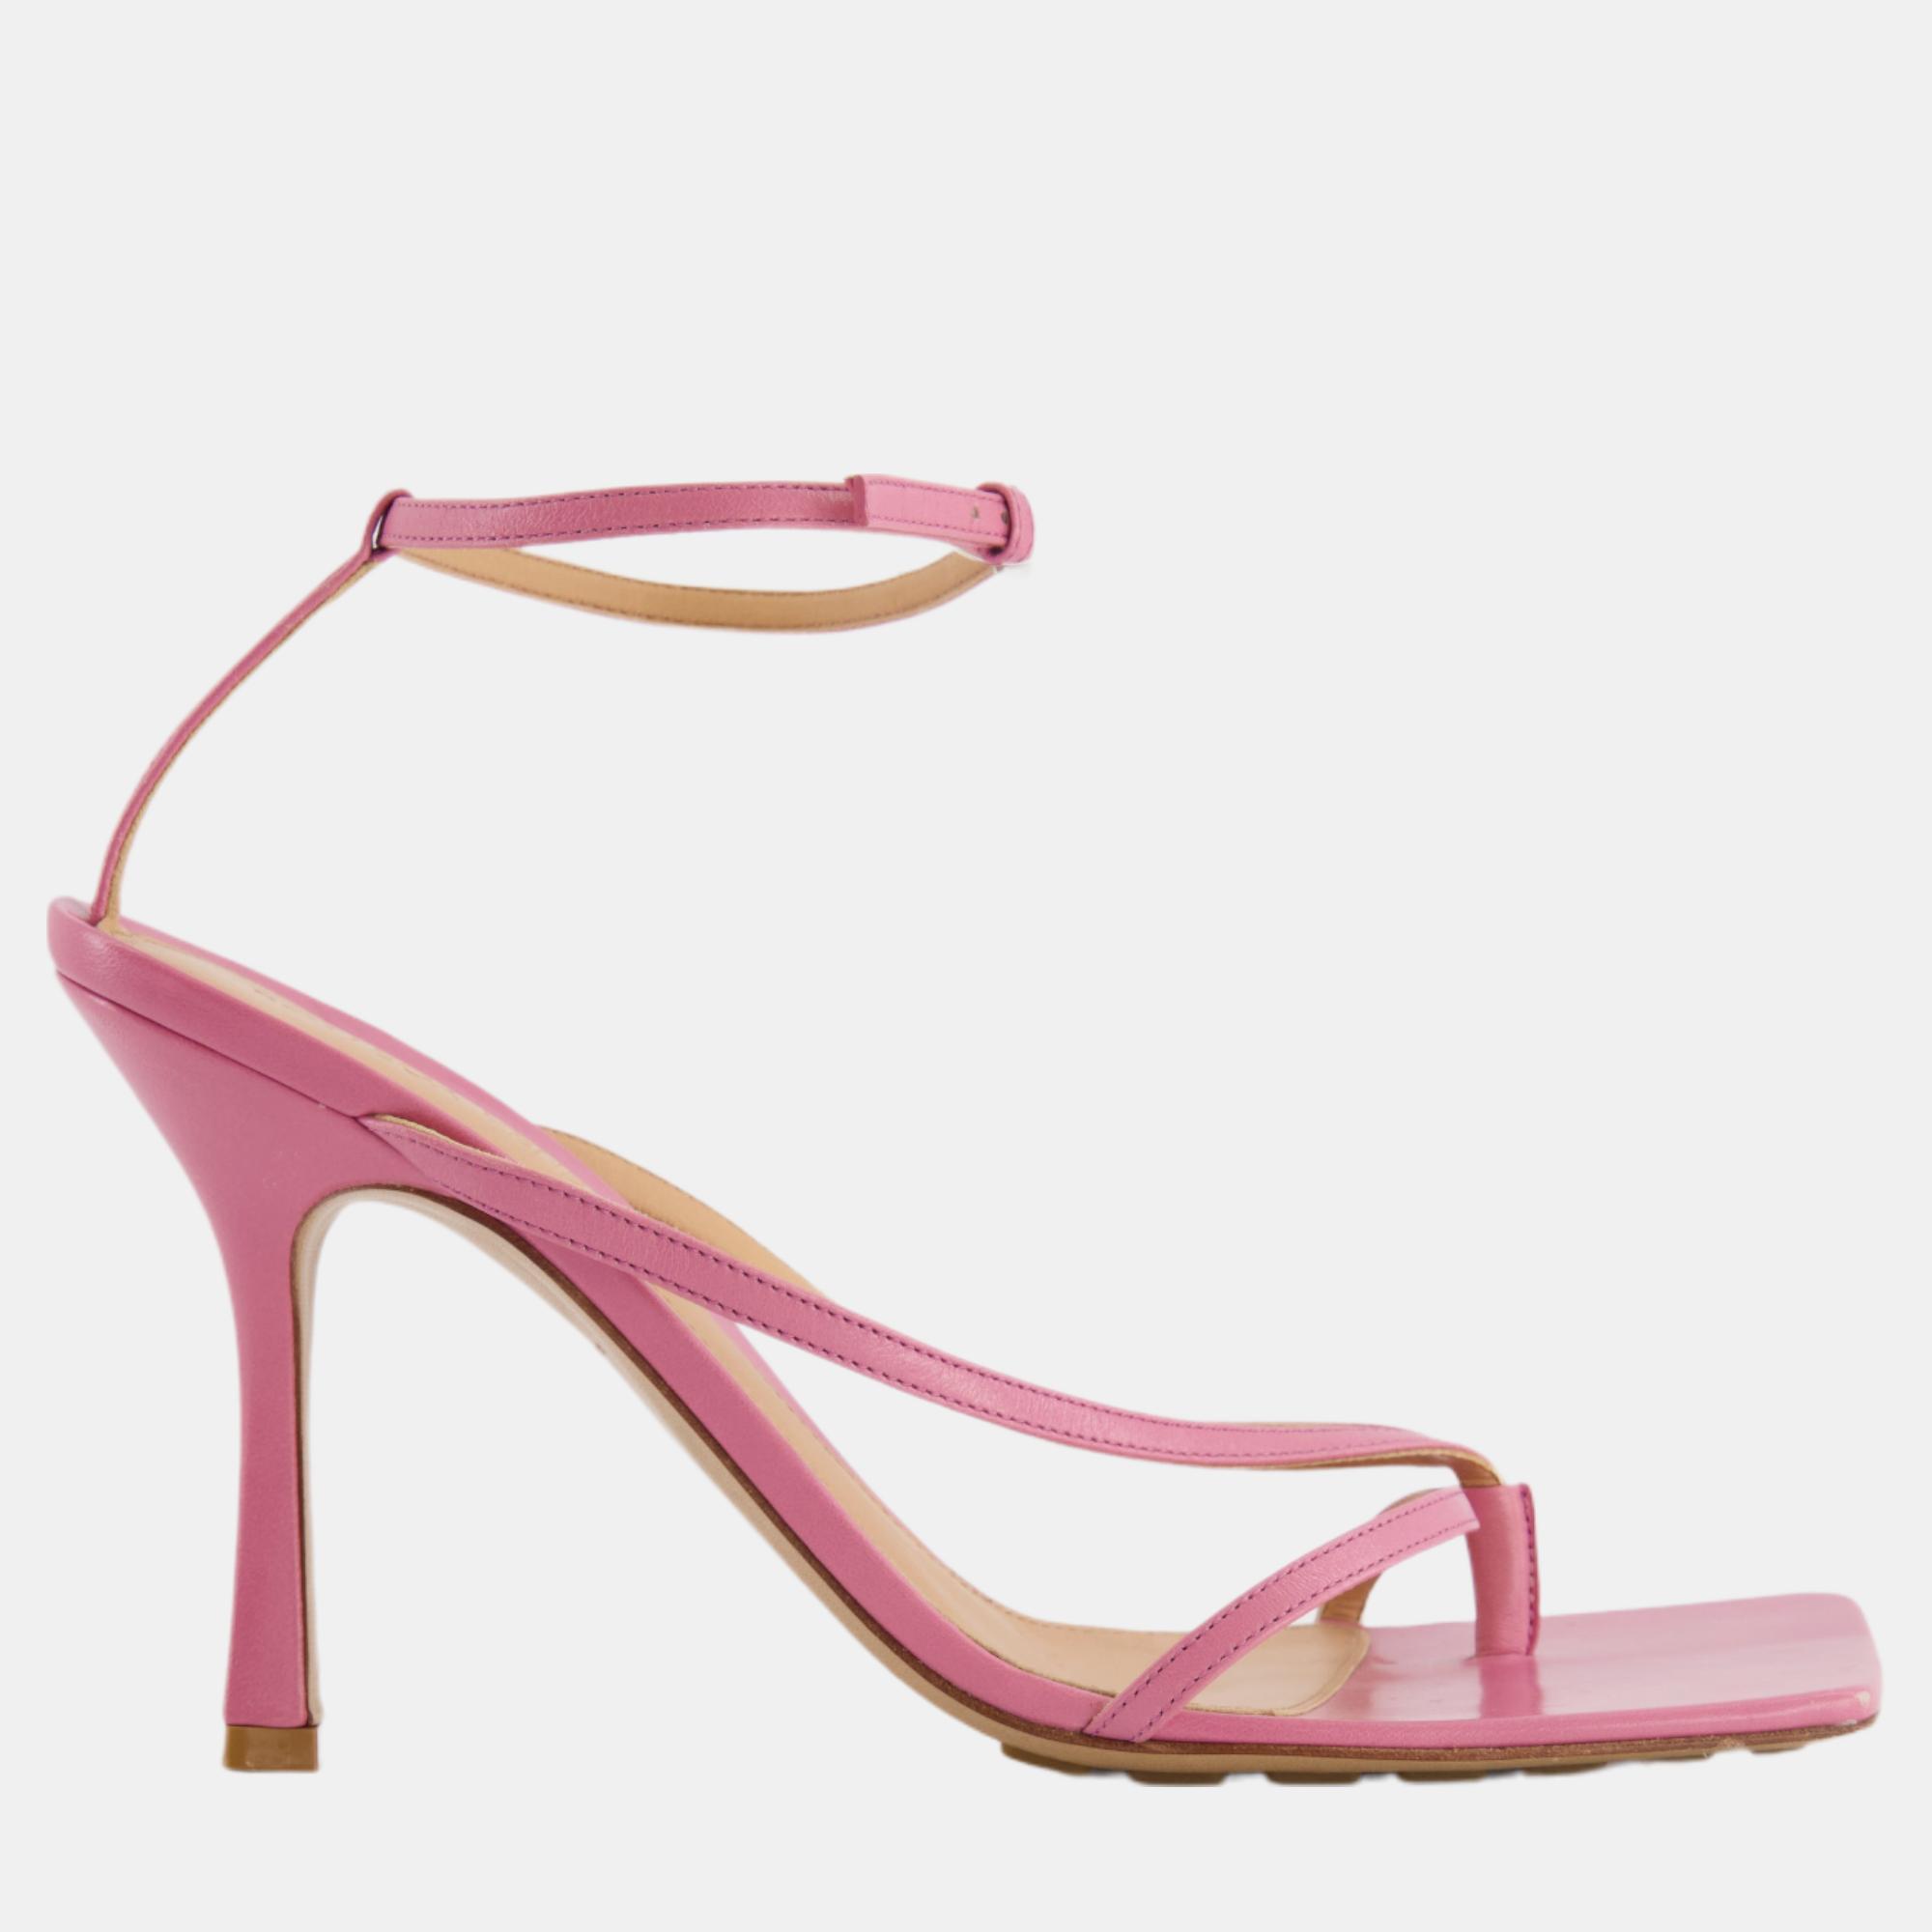 Bottega veneta pink stretch leather sandals size eu 40